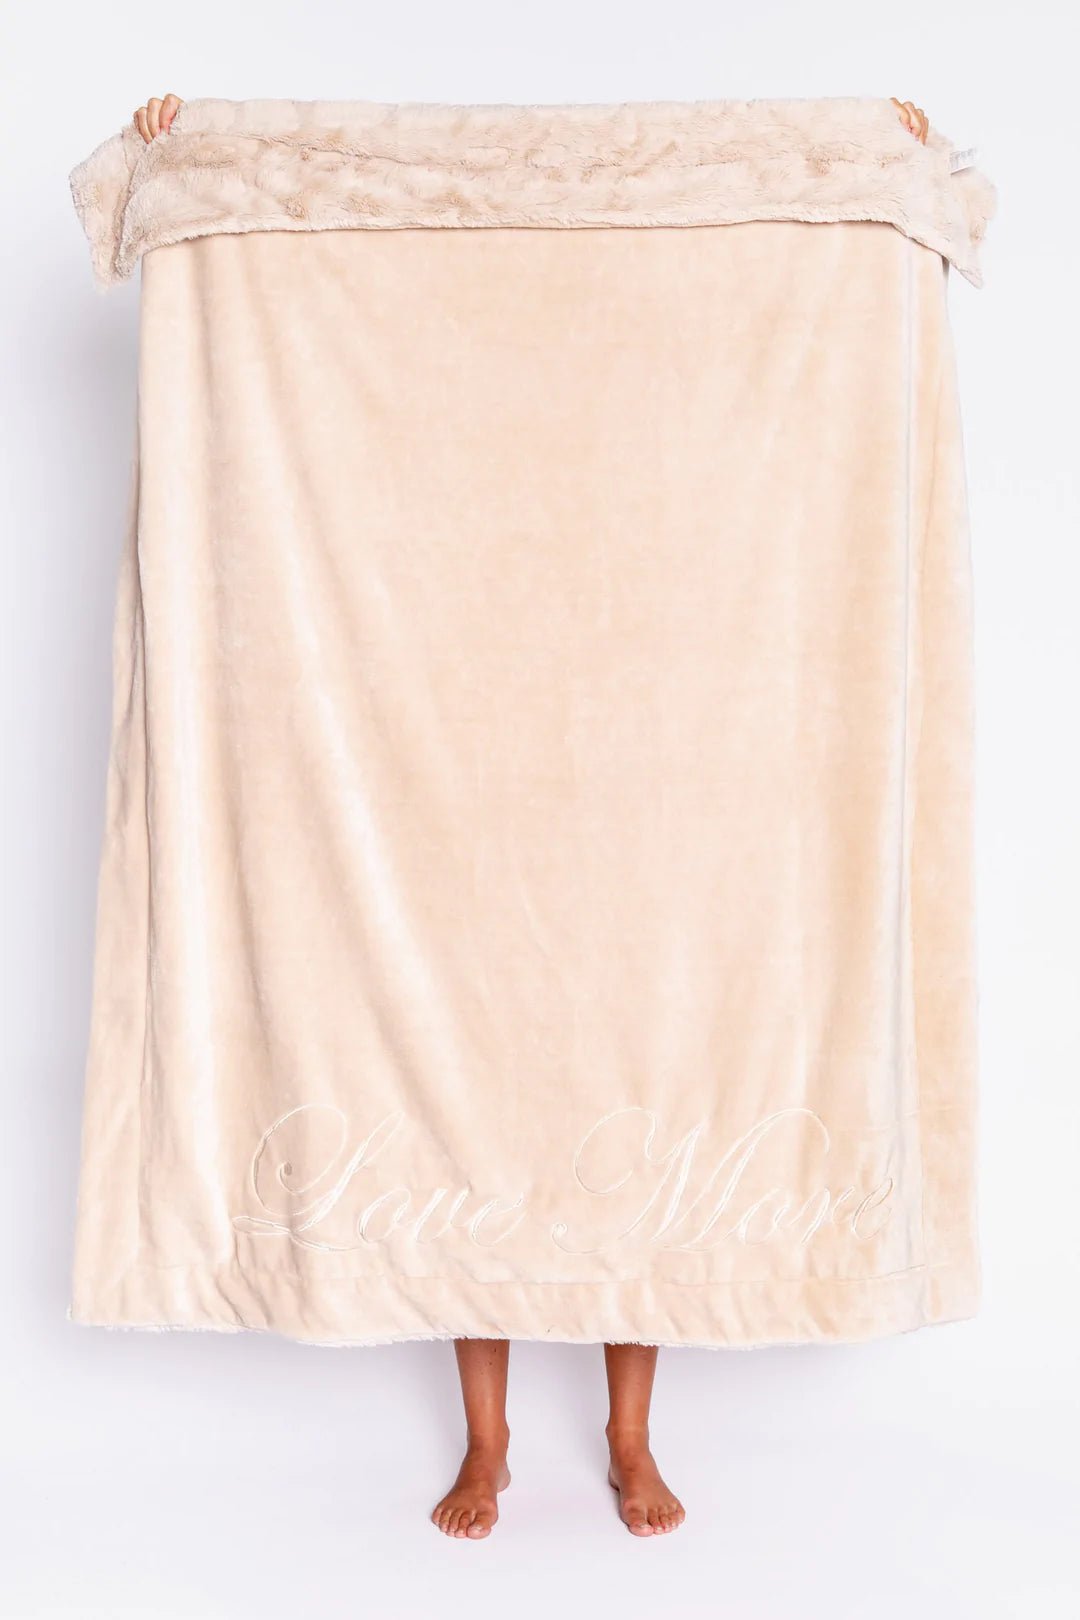 Luxe Plush Blanket - The Posh Loft